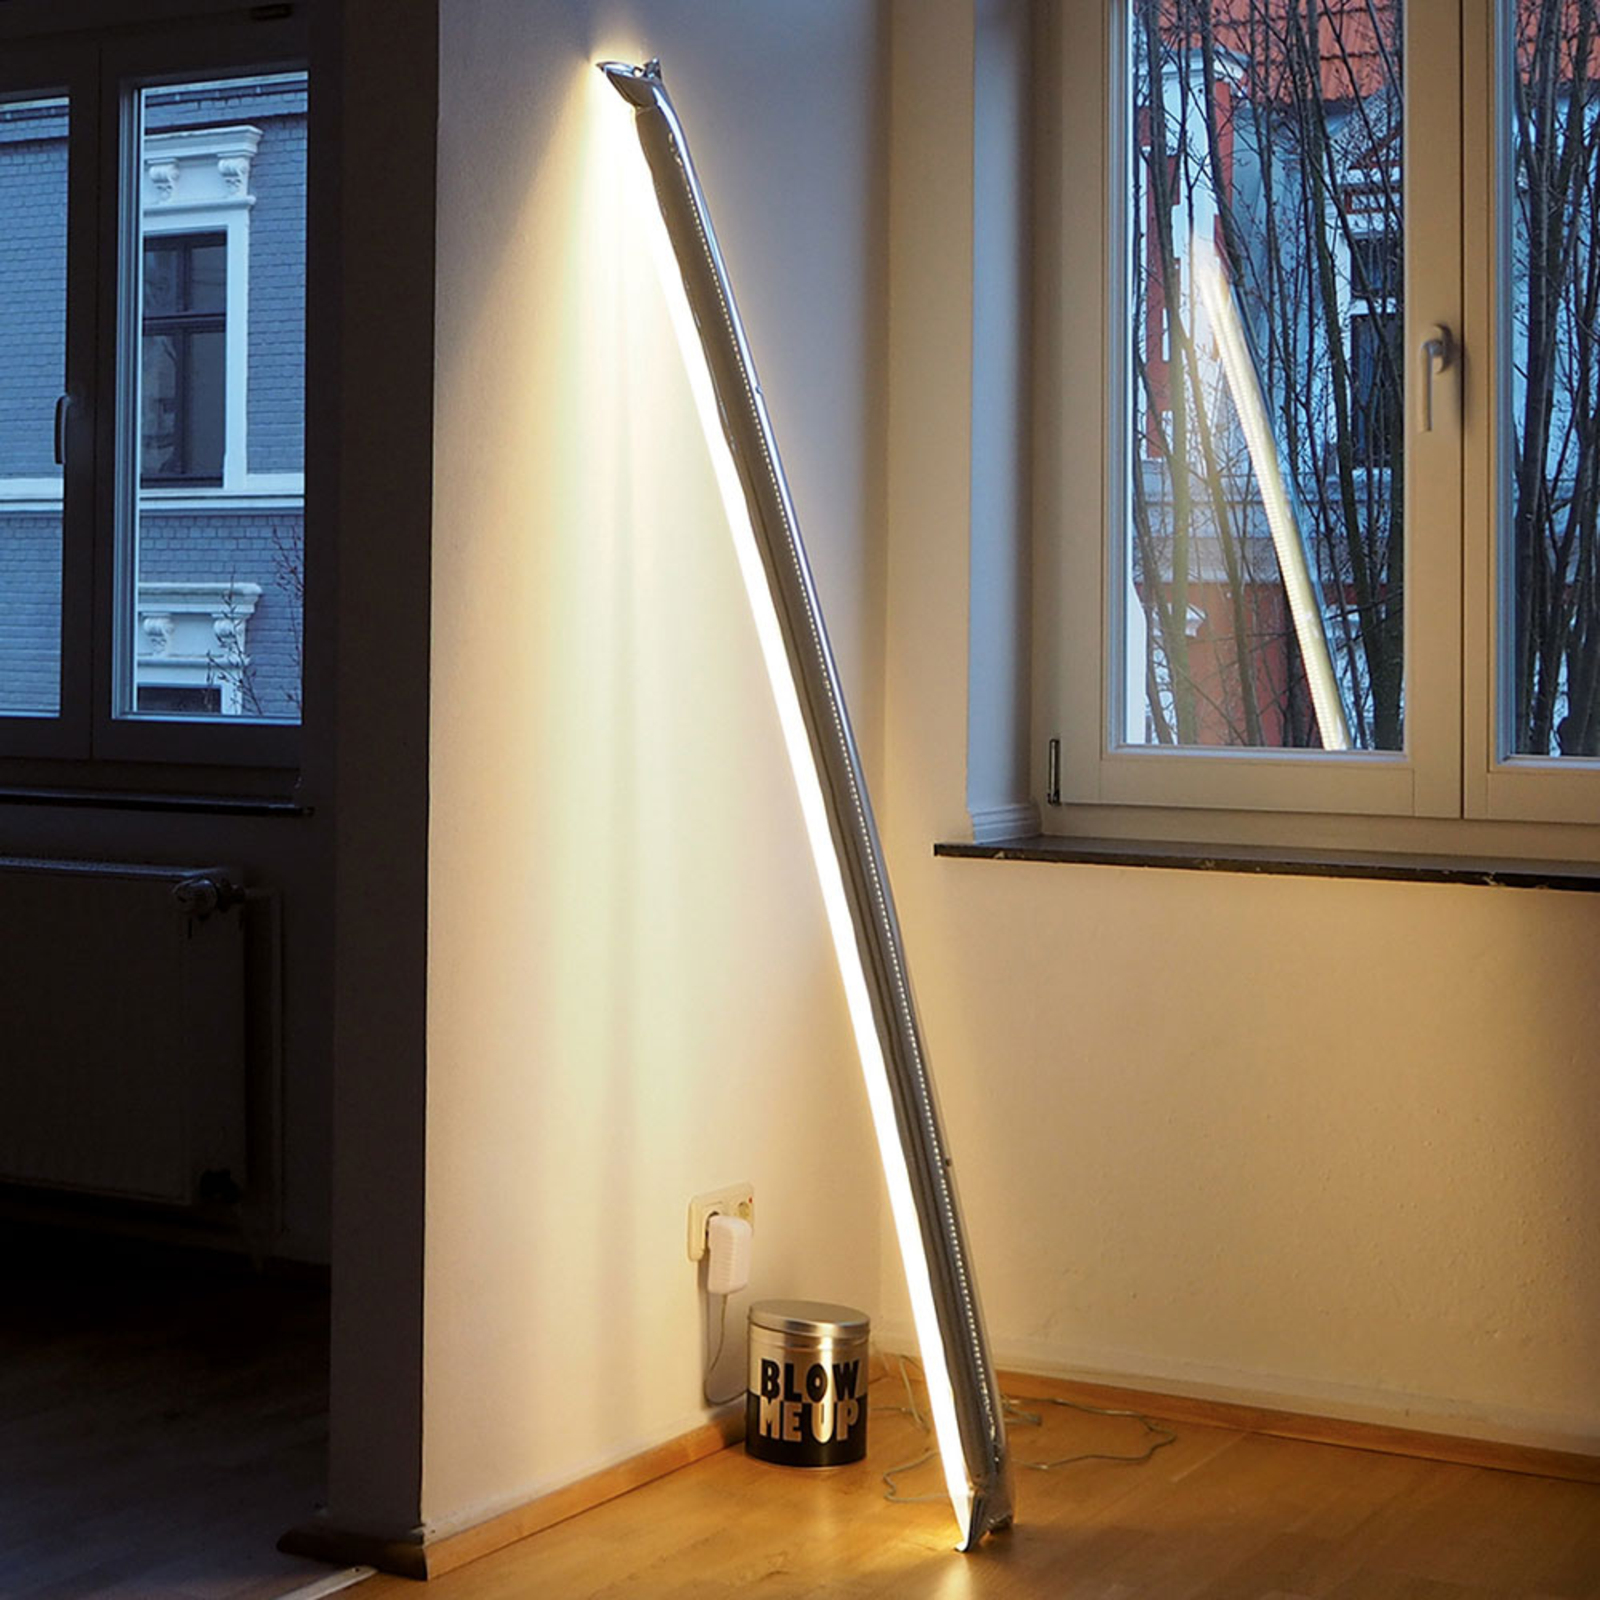 Ingo Maurer Blow me Up LED stojací lampa 120cm